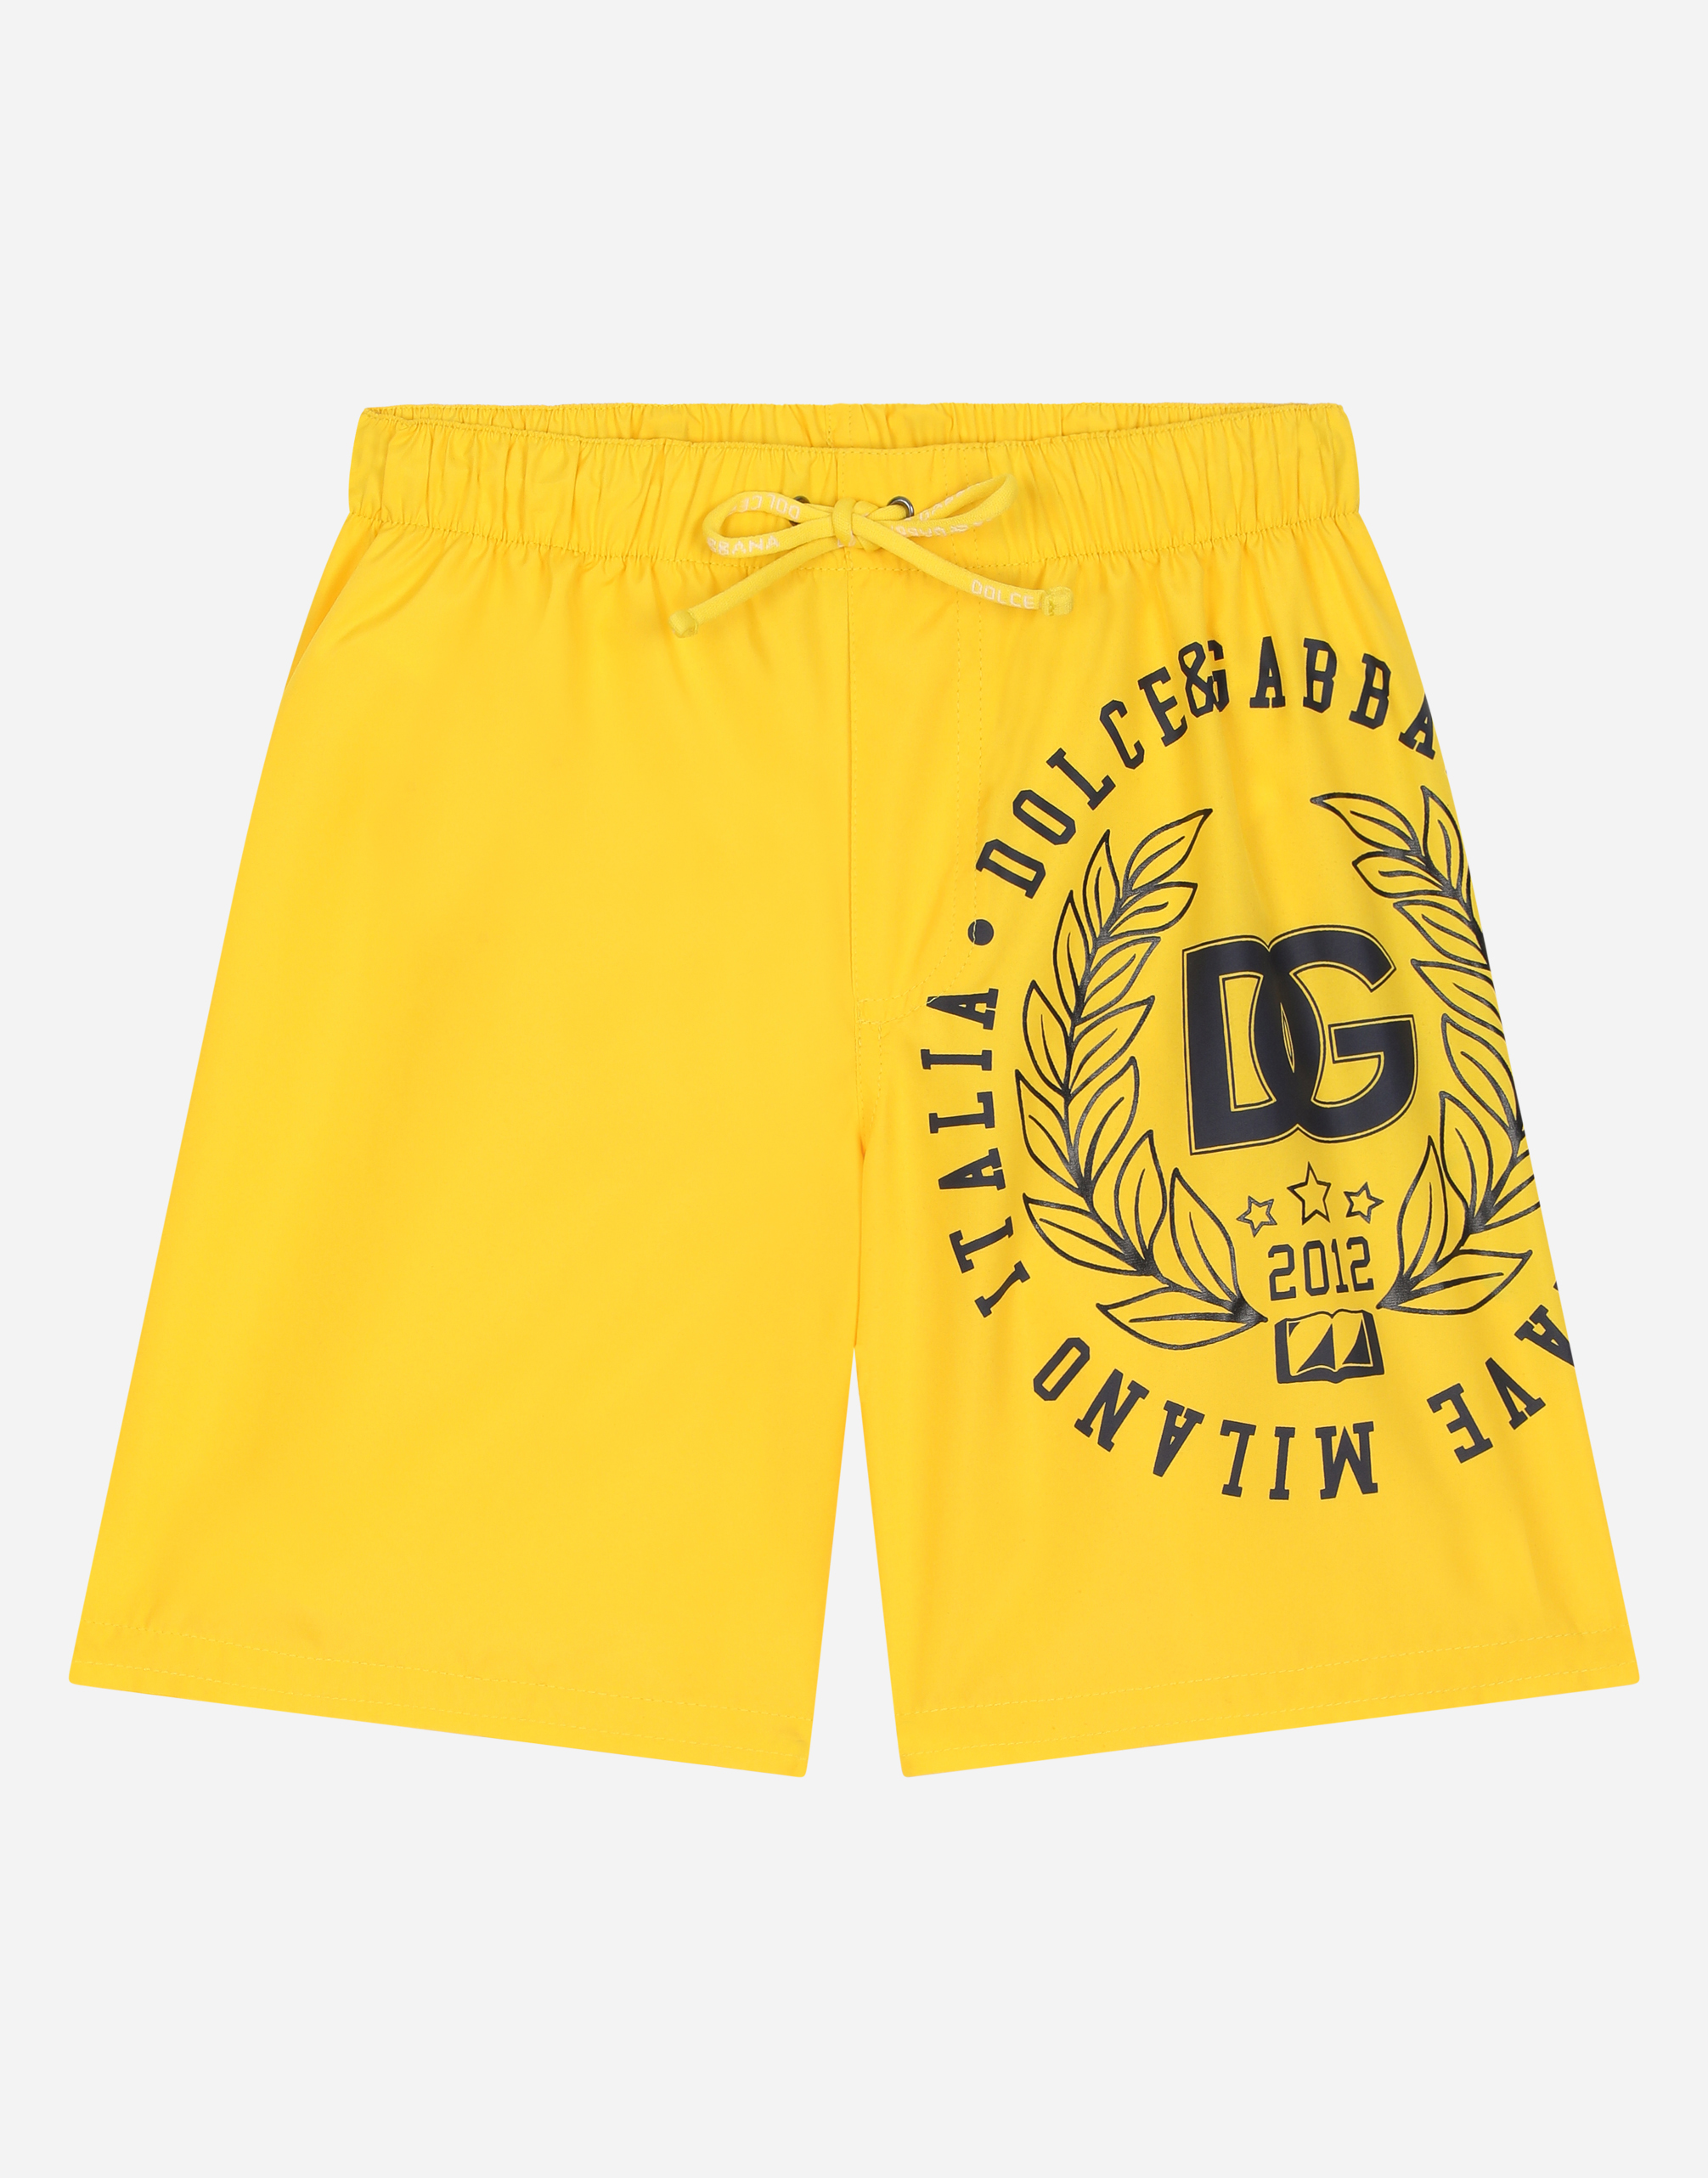 Nylon swim trunks with DG laurel logo in Yellow